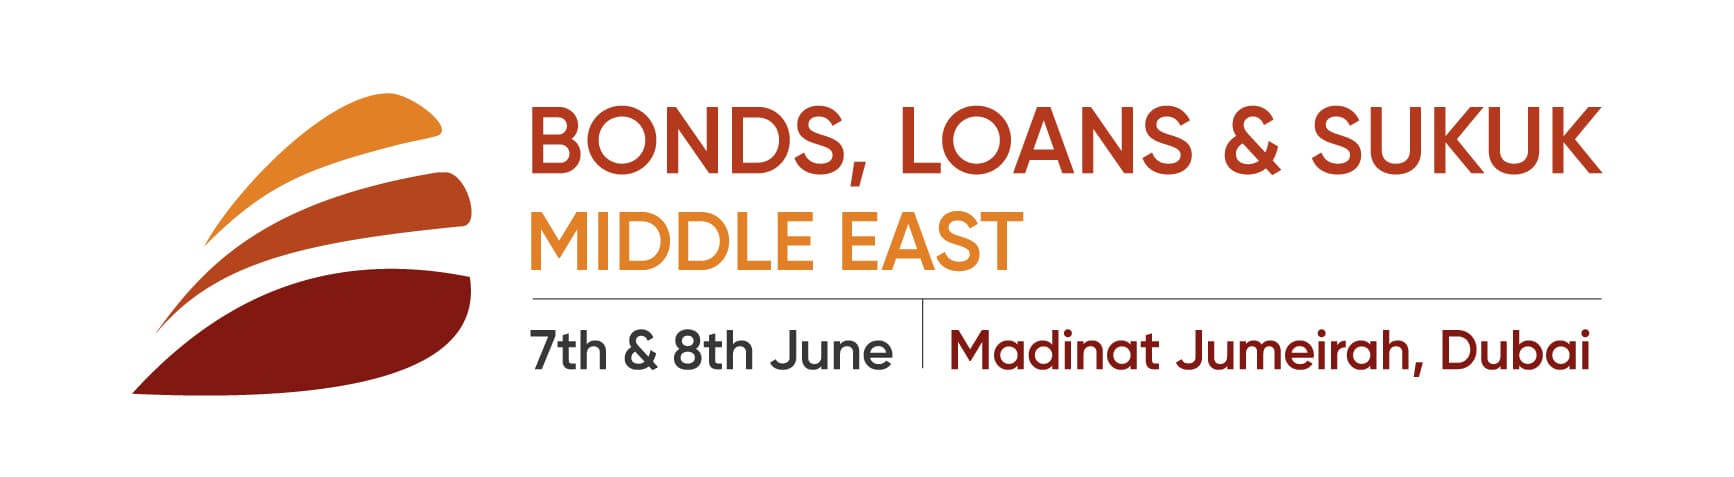 Bonds, Loans & Sukuk Middle East